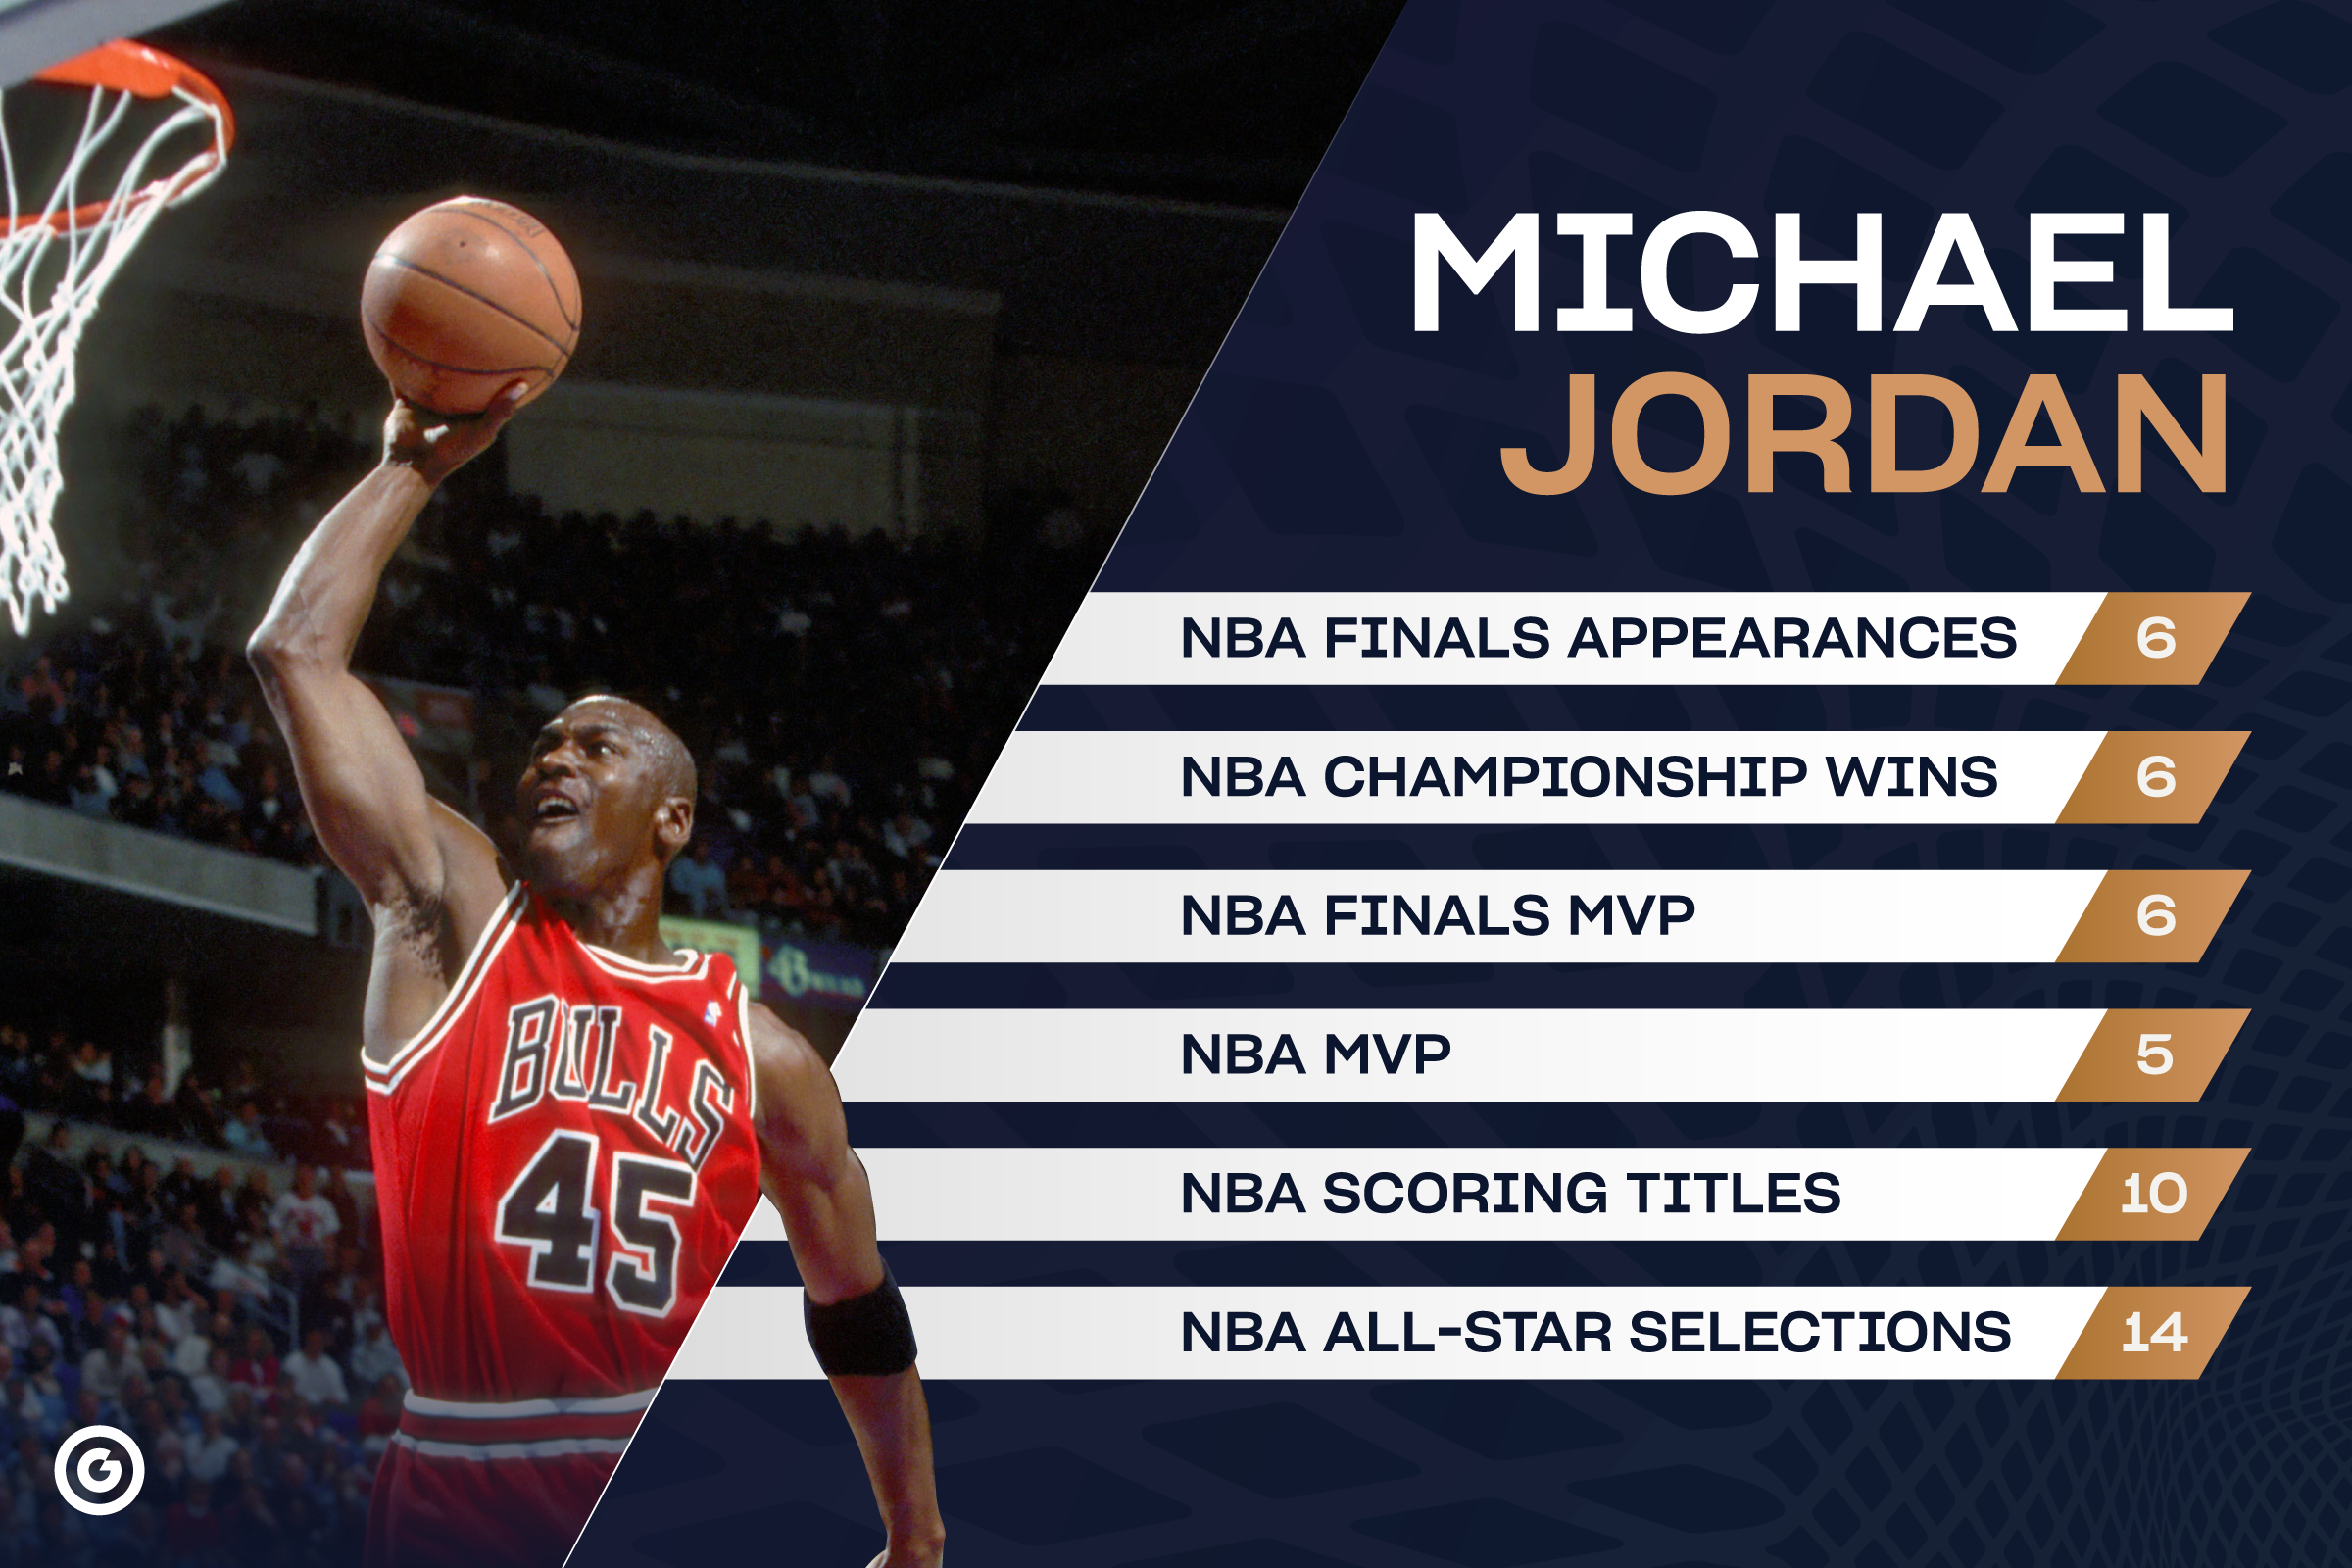 Michael Jordan accomplishements